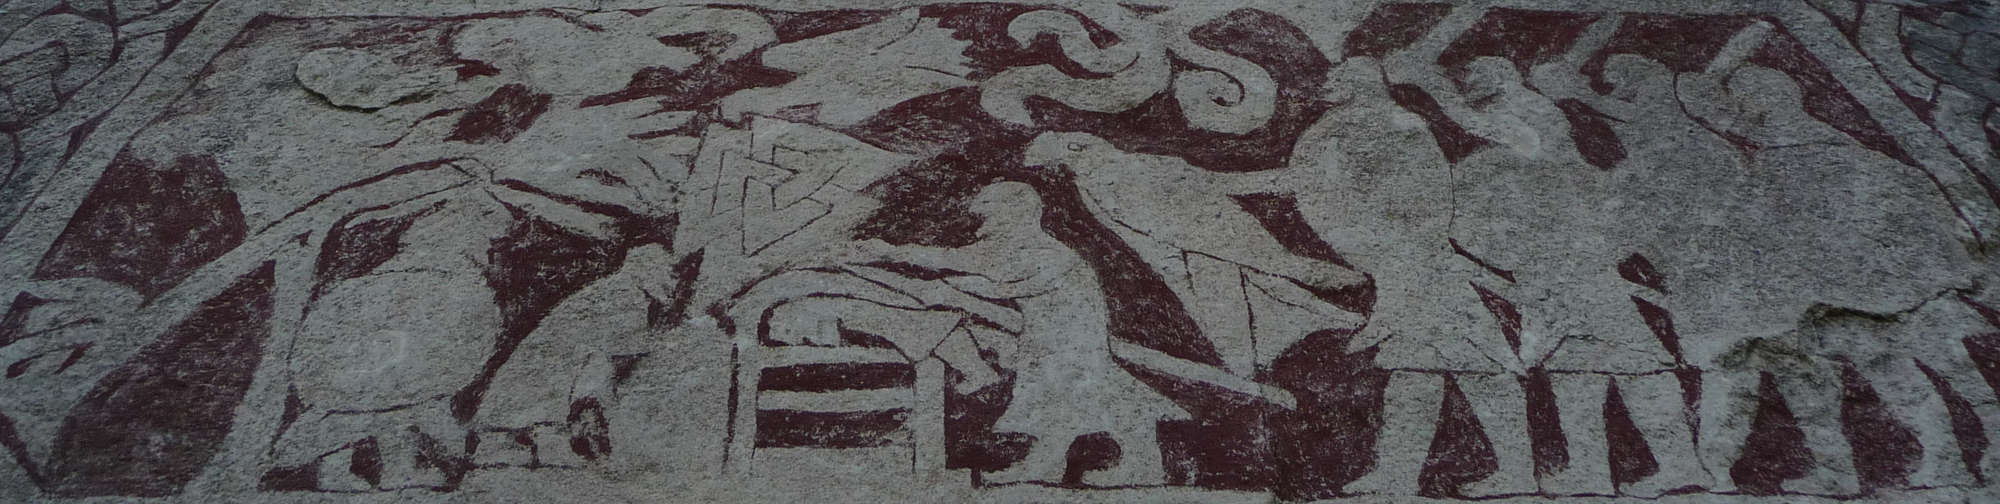 Sacrifice humain (aigle de sang ?) sur la pierre de Stora Hammars I